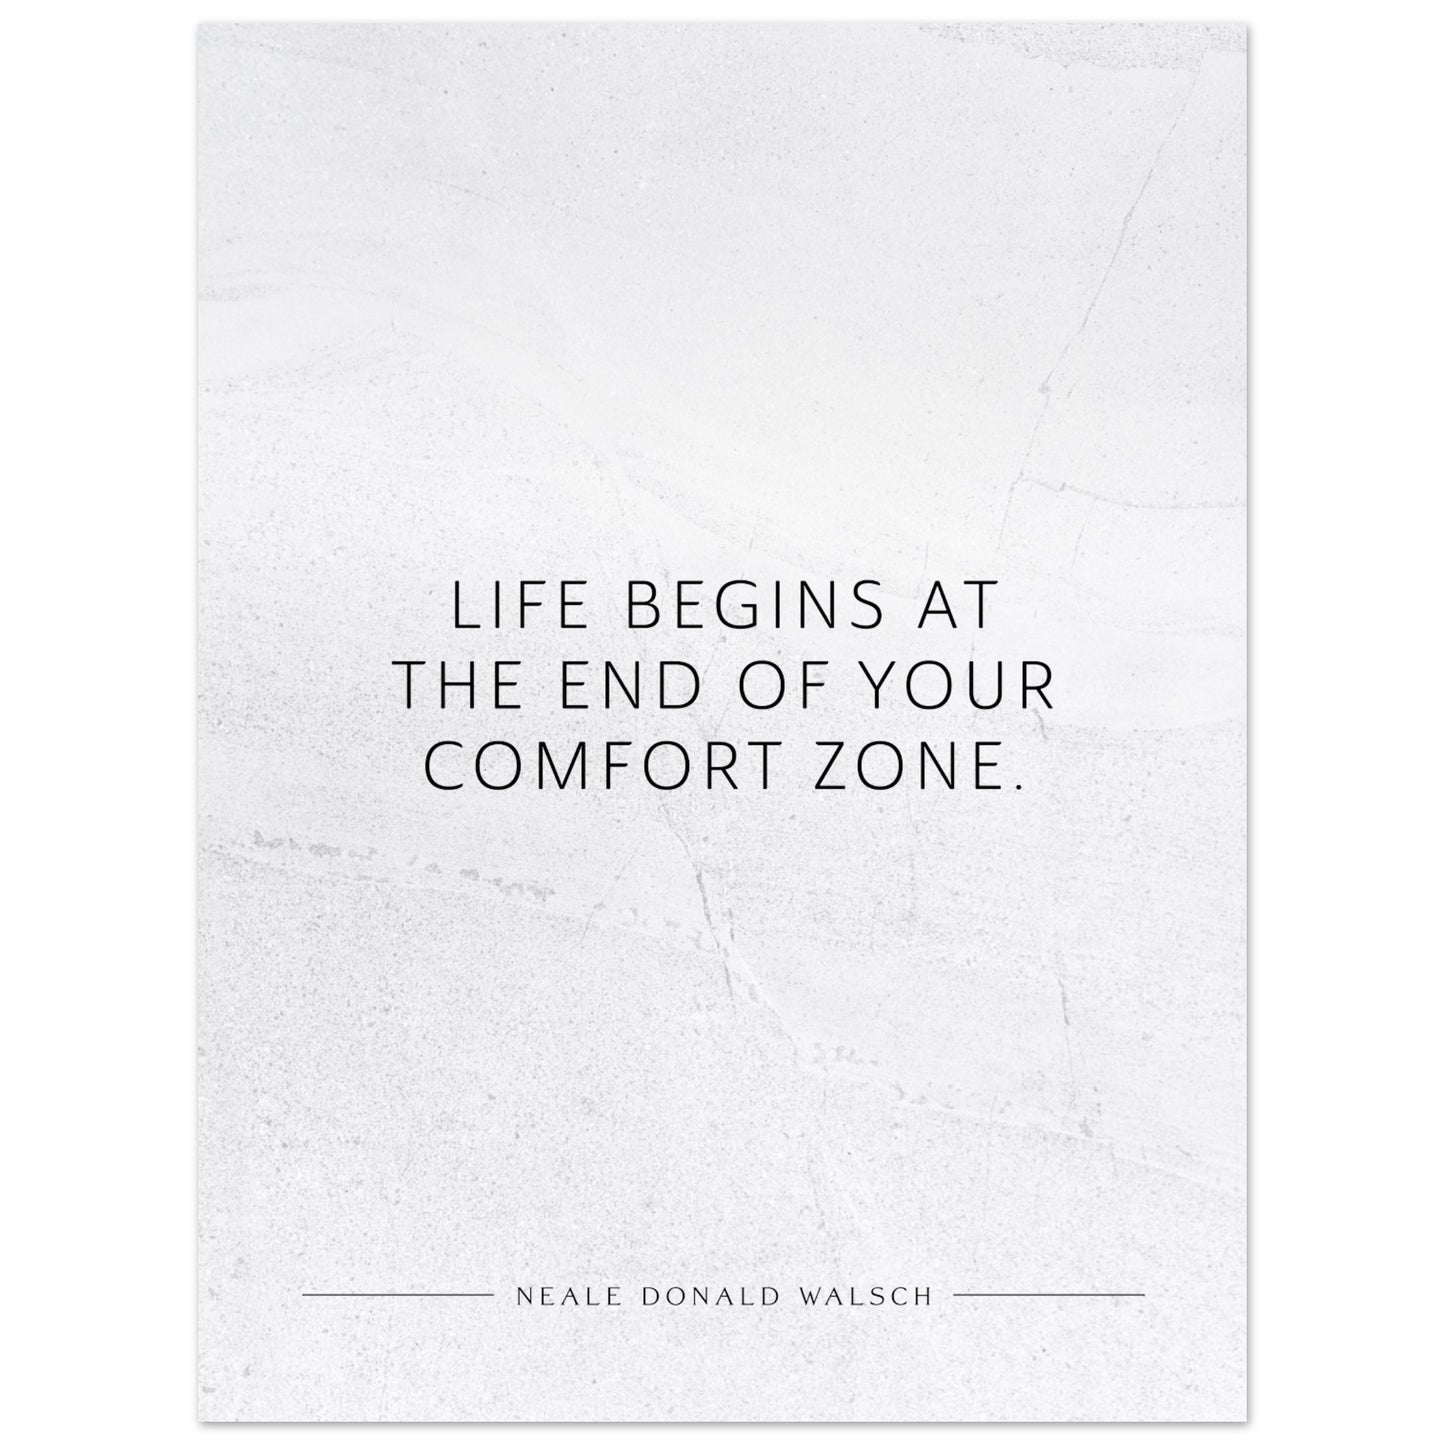 Life begins at the end of your … (Neale Donald Walsch) – Poster Seidenmatt Weiss in gewellter Steinoptik – ohne Rahmen